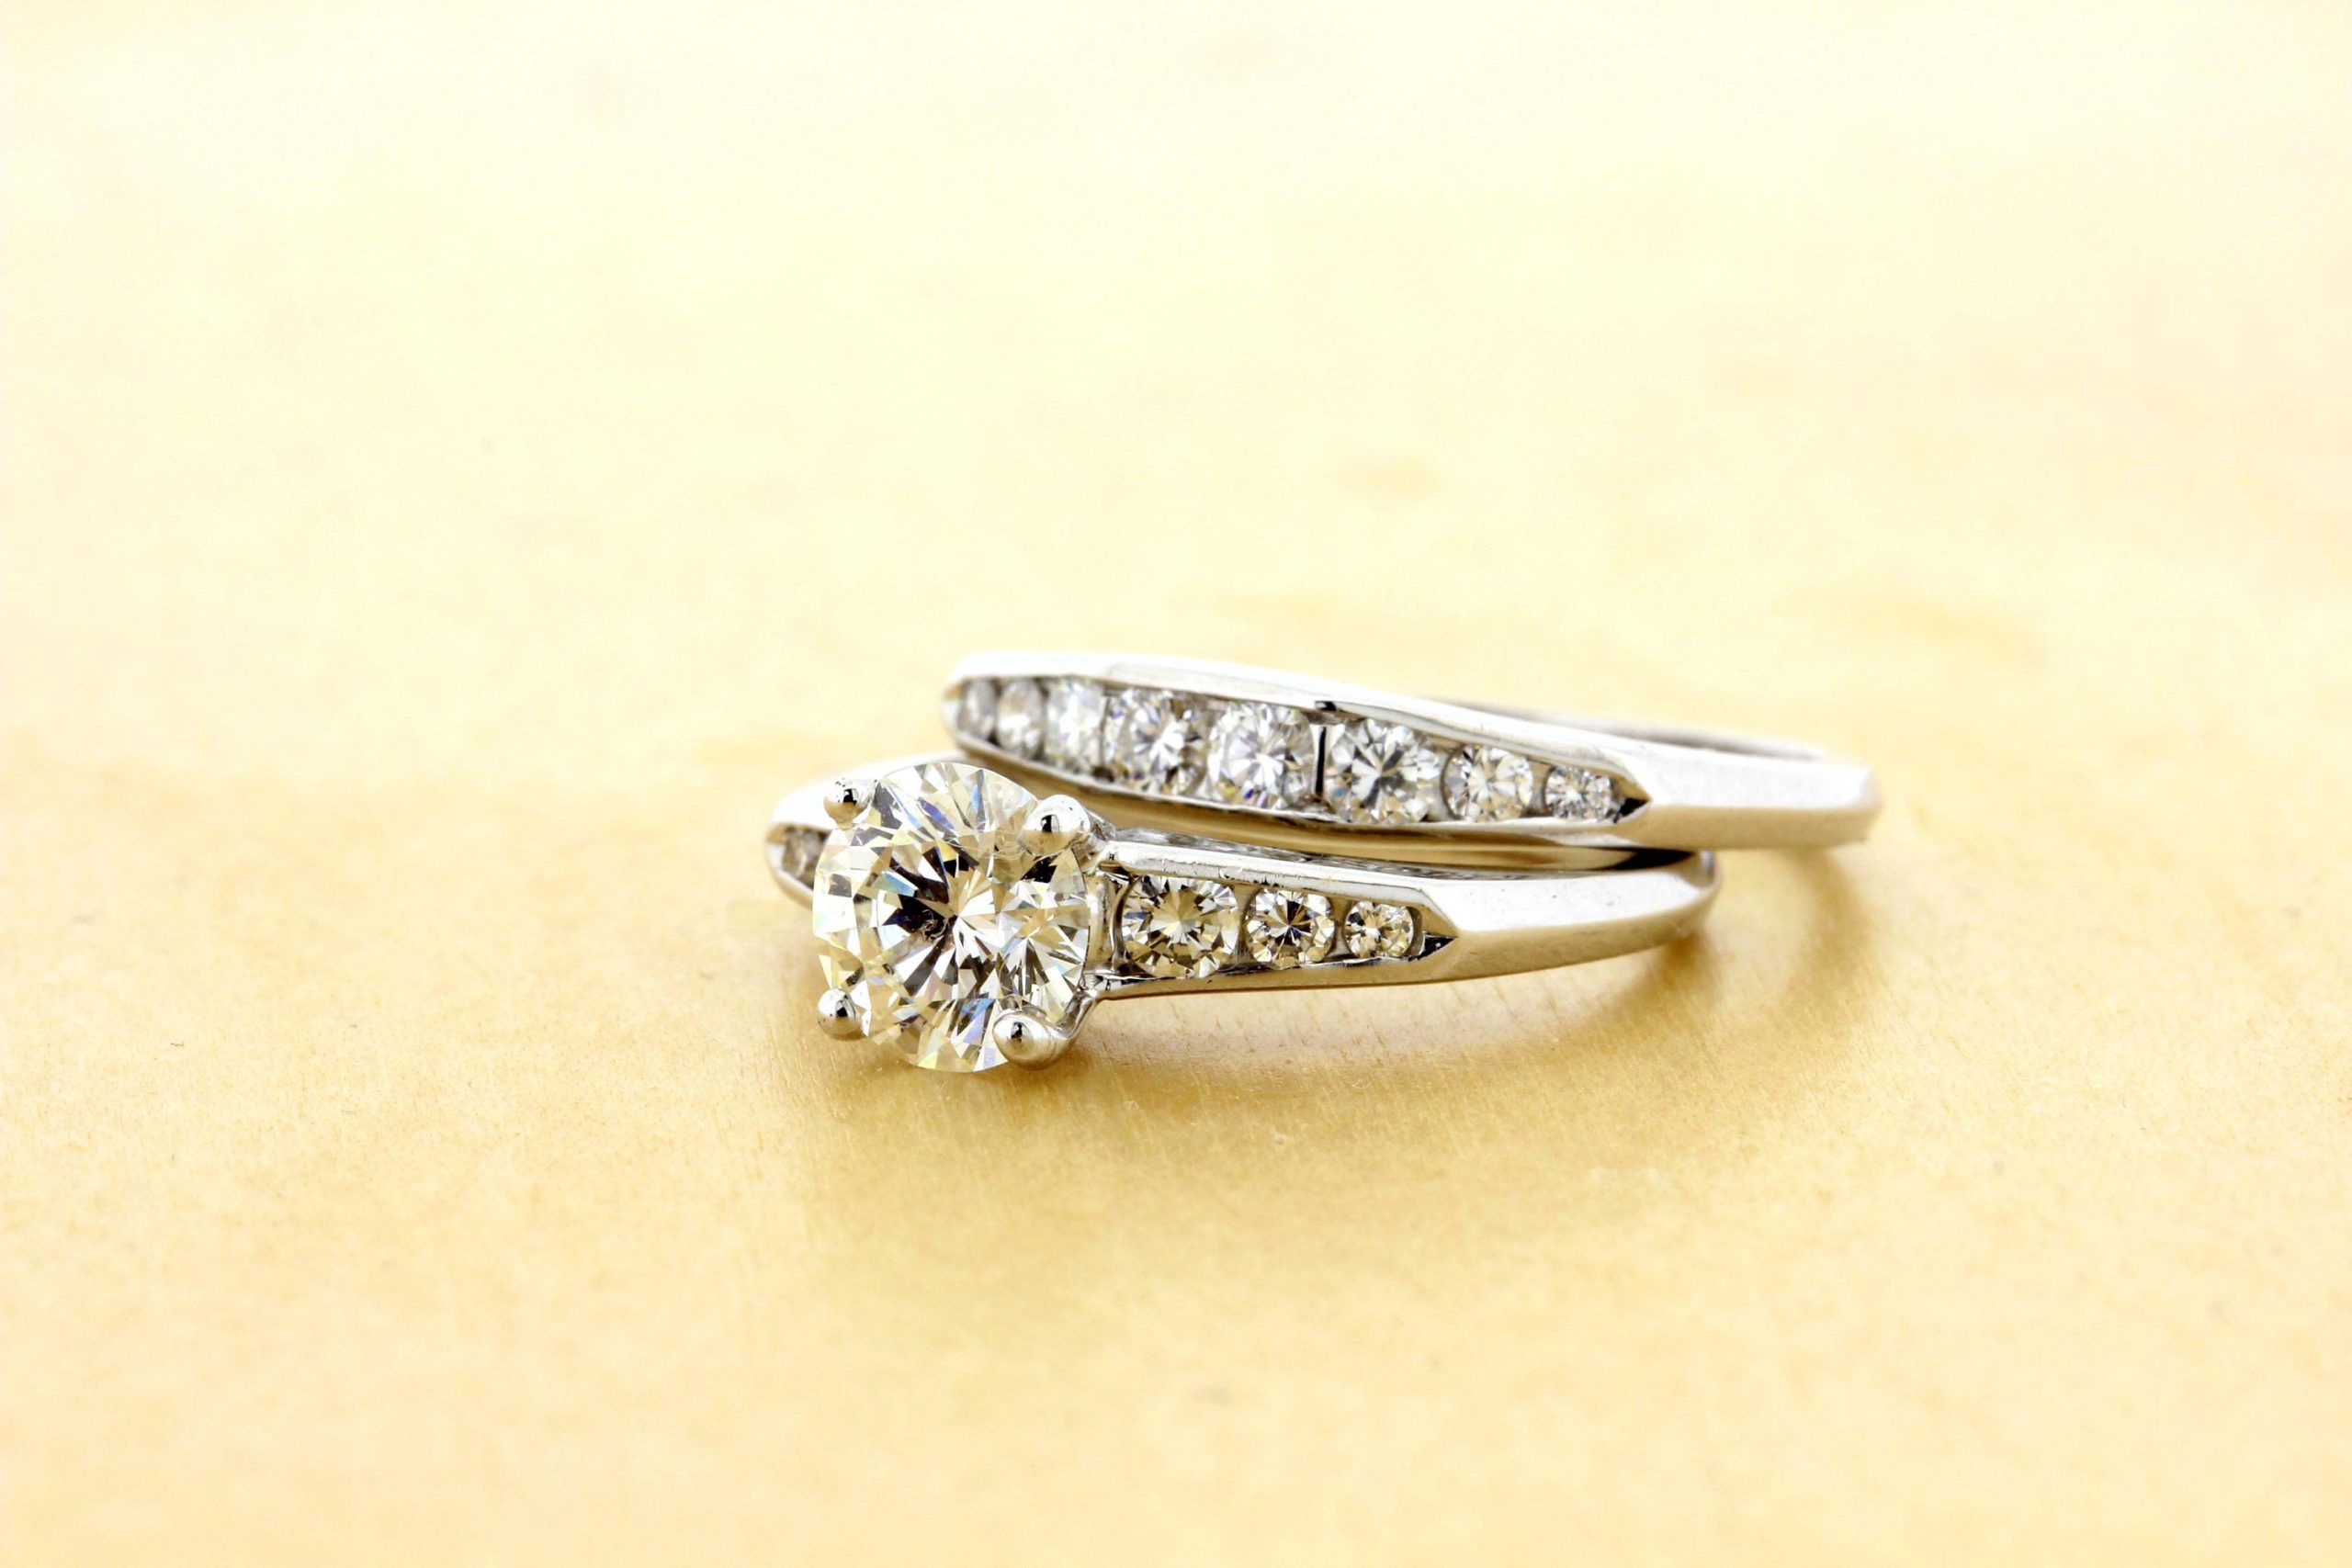 Ruby Antique Style Milgrain Diamond ring - 14K White Gold |JewelsForMe